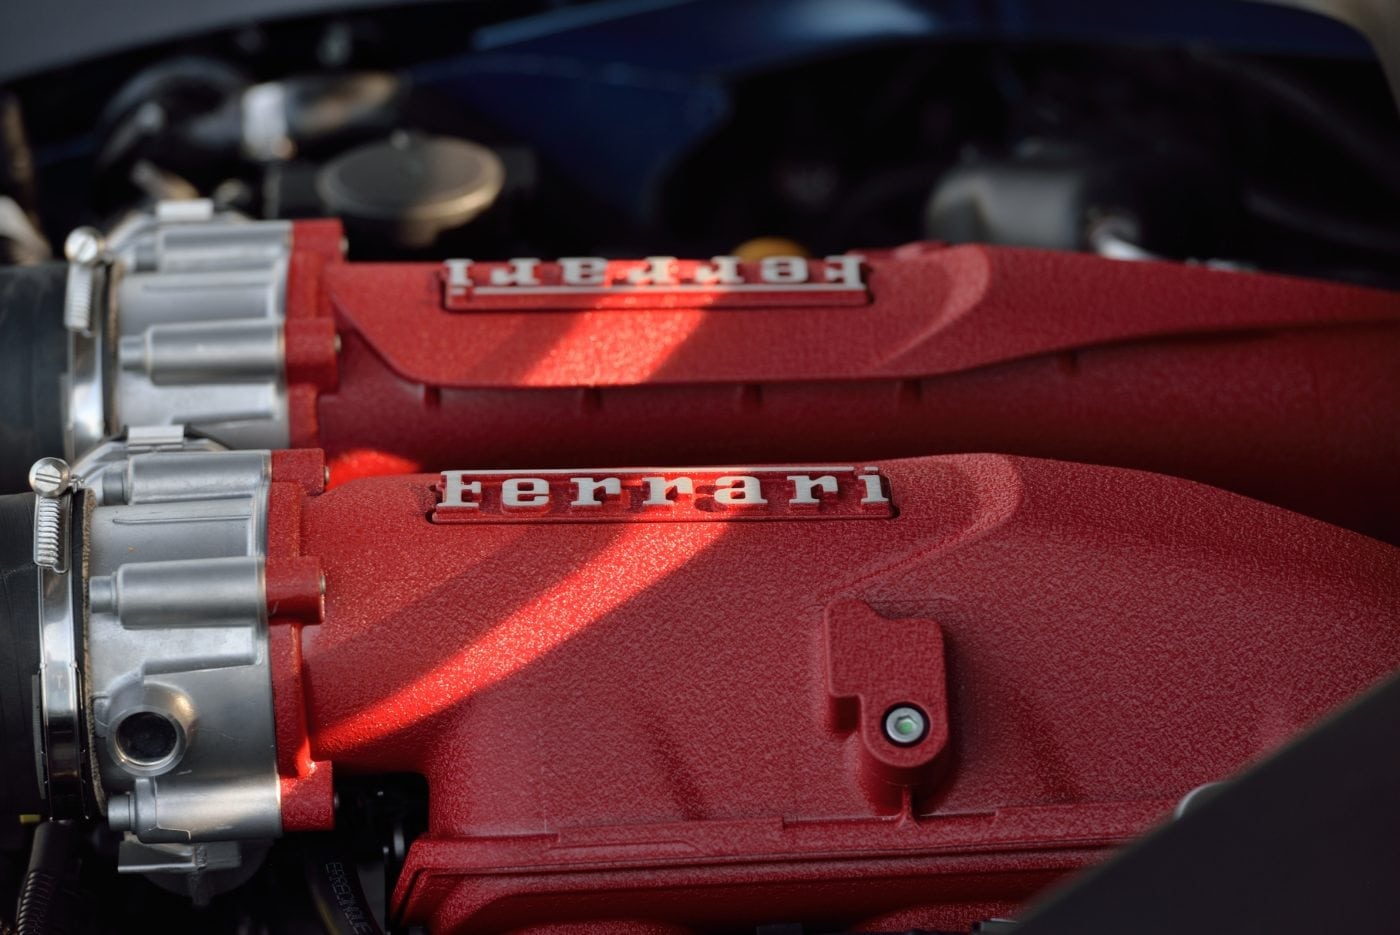 Every Ferrari California T engine is a symmetrical masterpiece